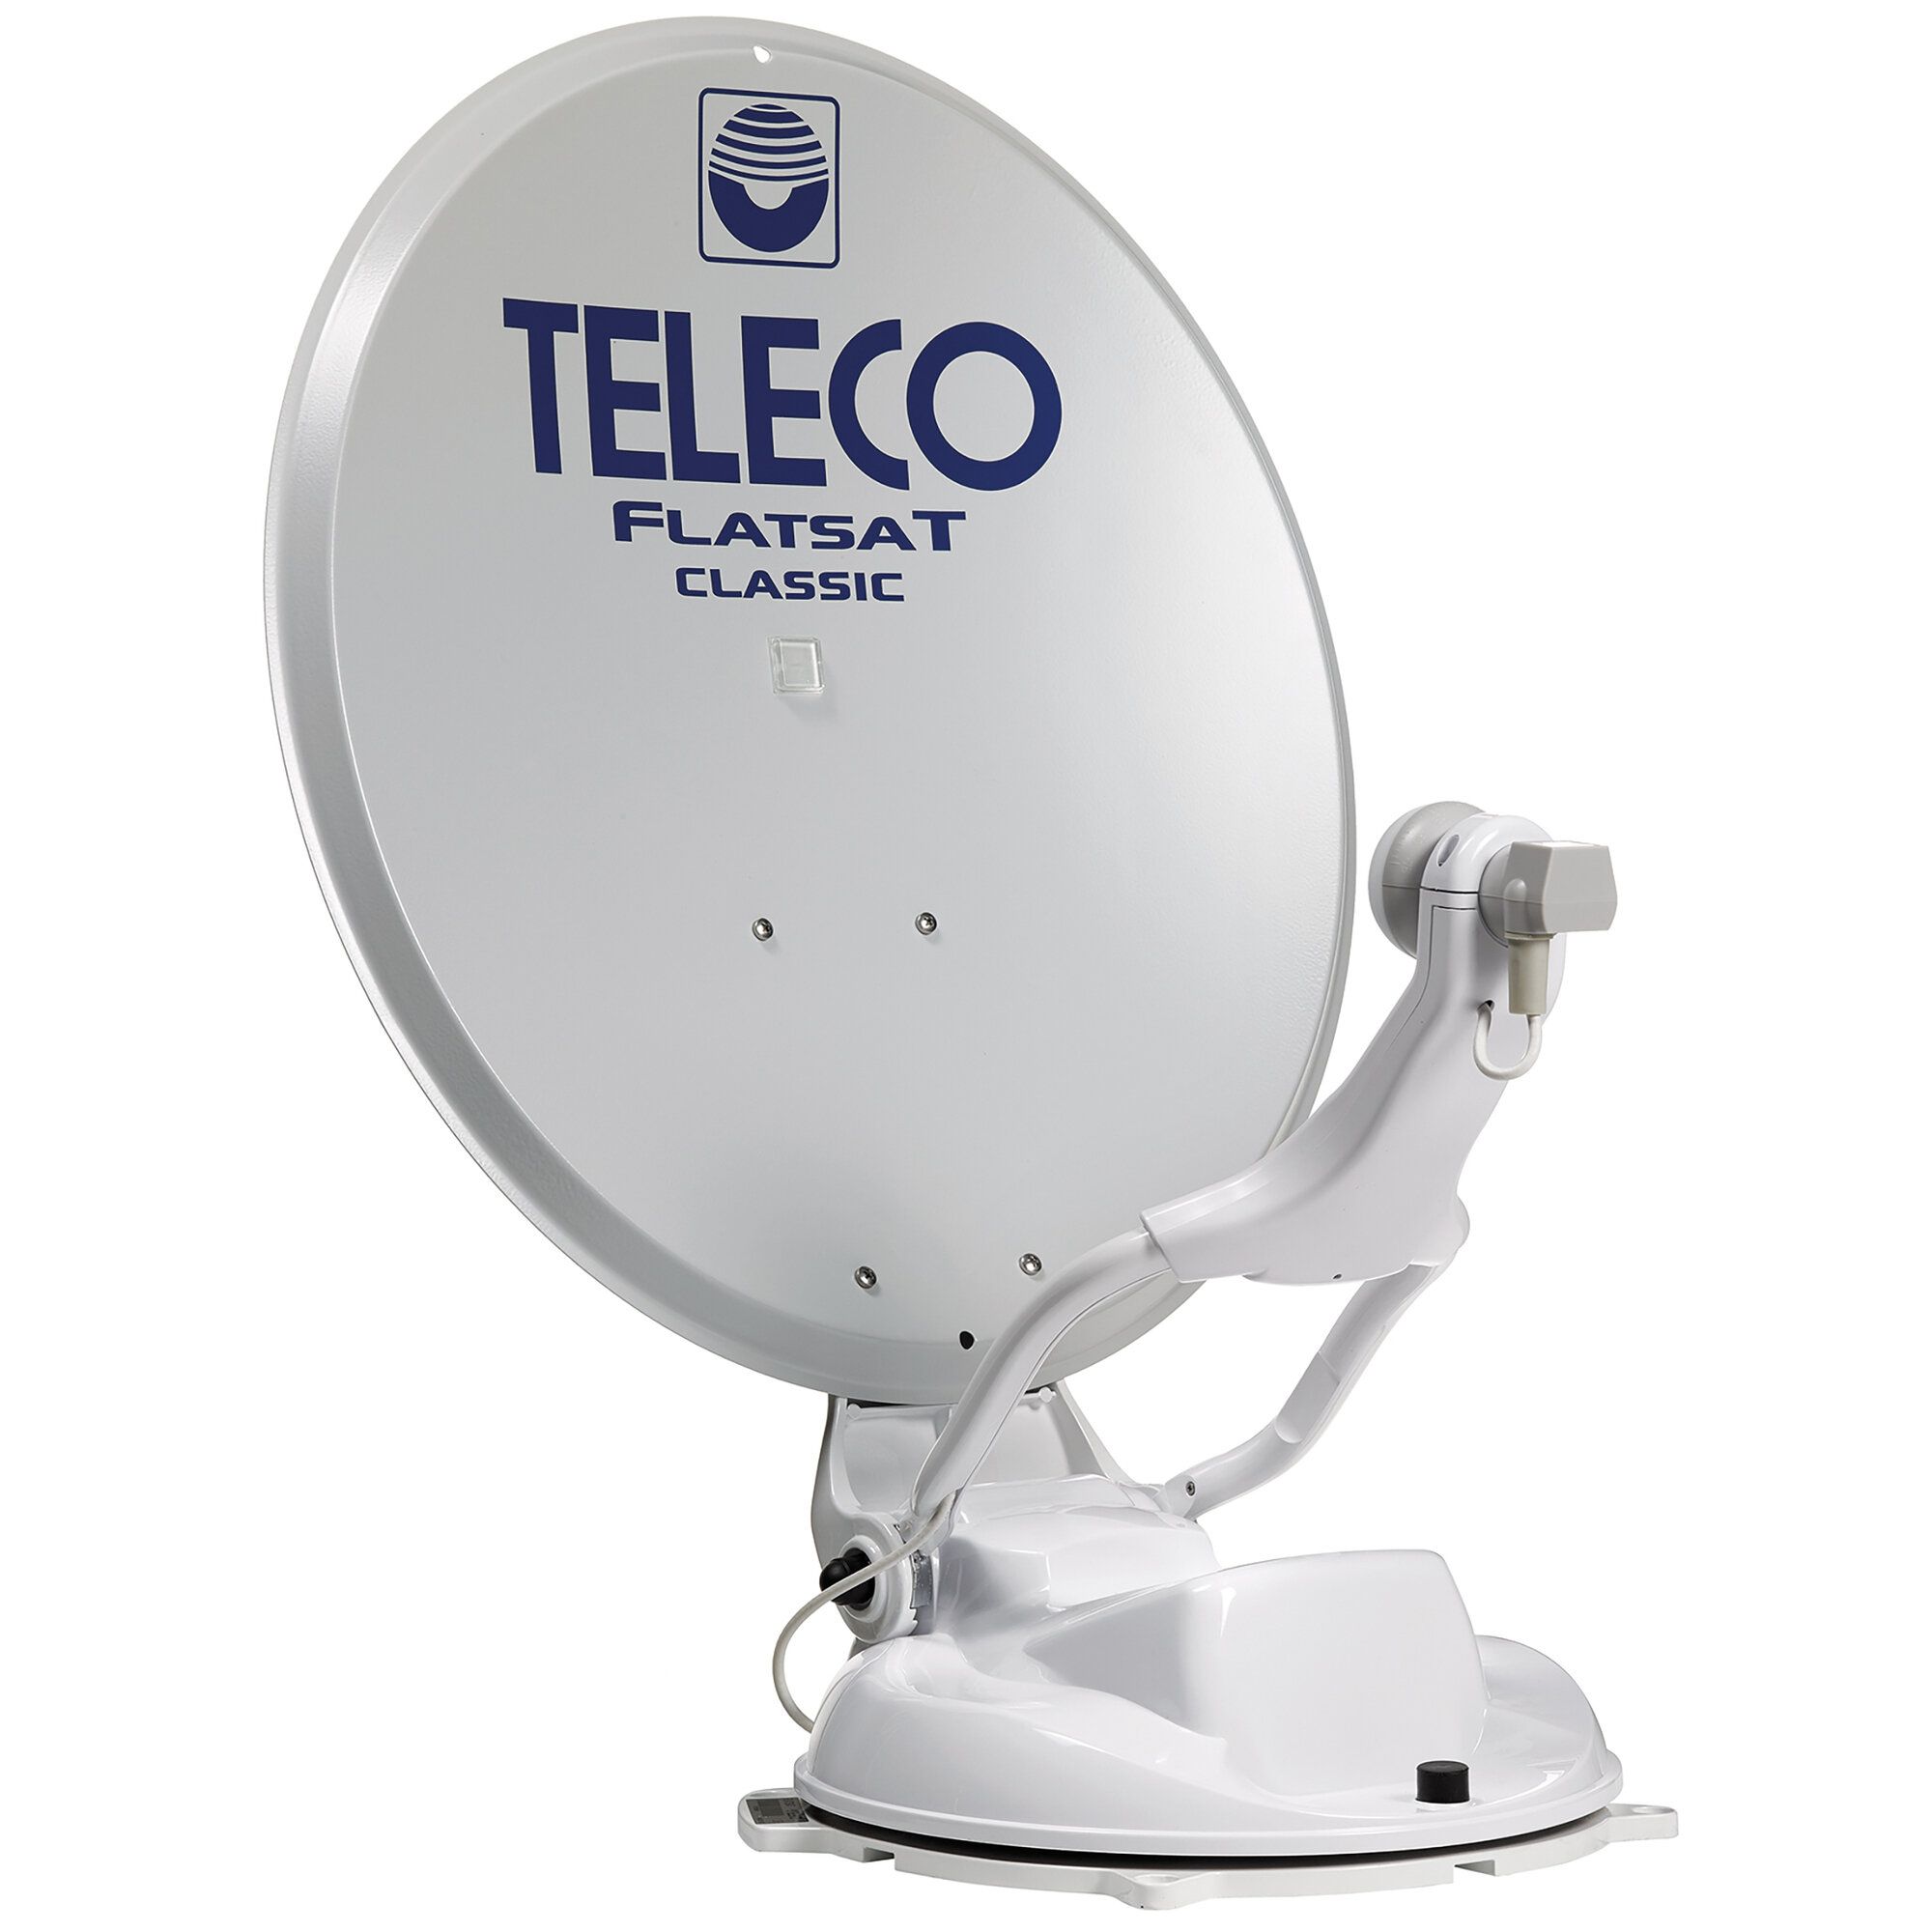 Satelitní systém Teleco FlatSat Classic TWIN